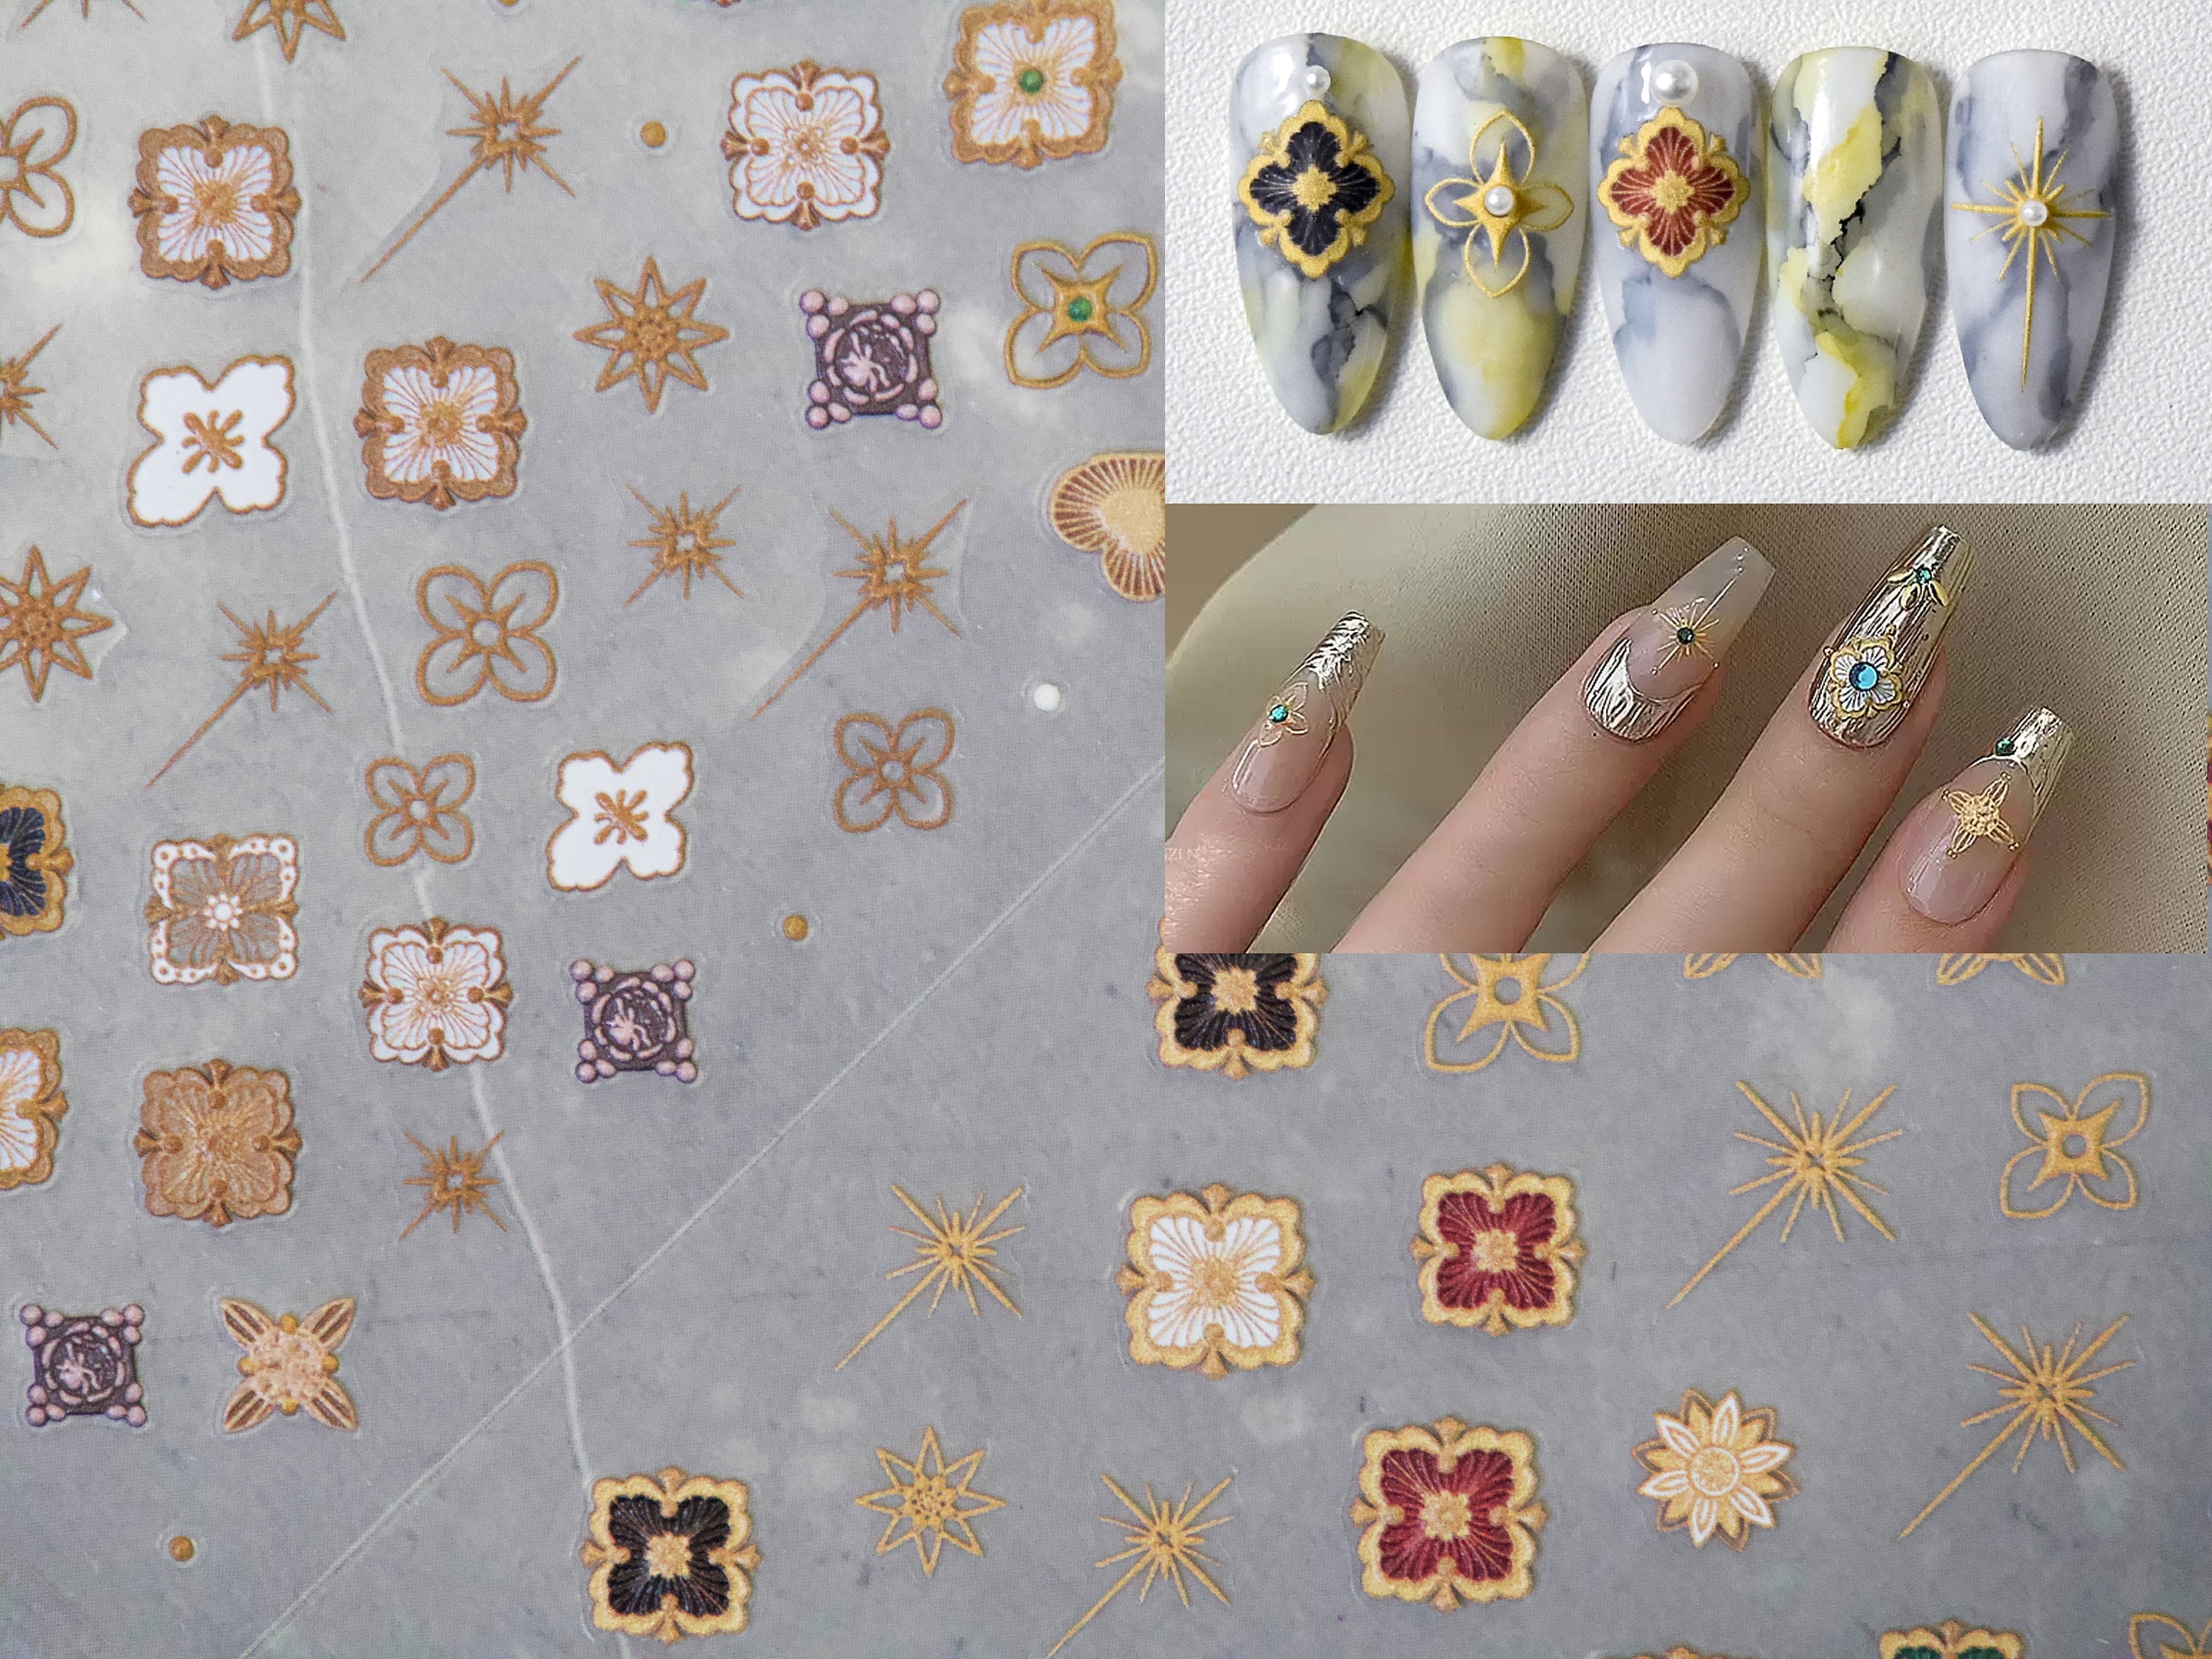 How to make fake nails || Nail art tutorial || Italian flag 🇮🇹❤️ - YouTube